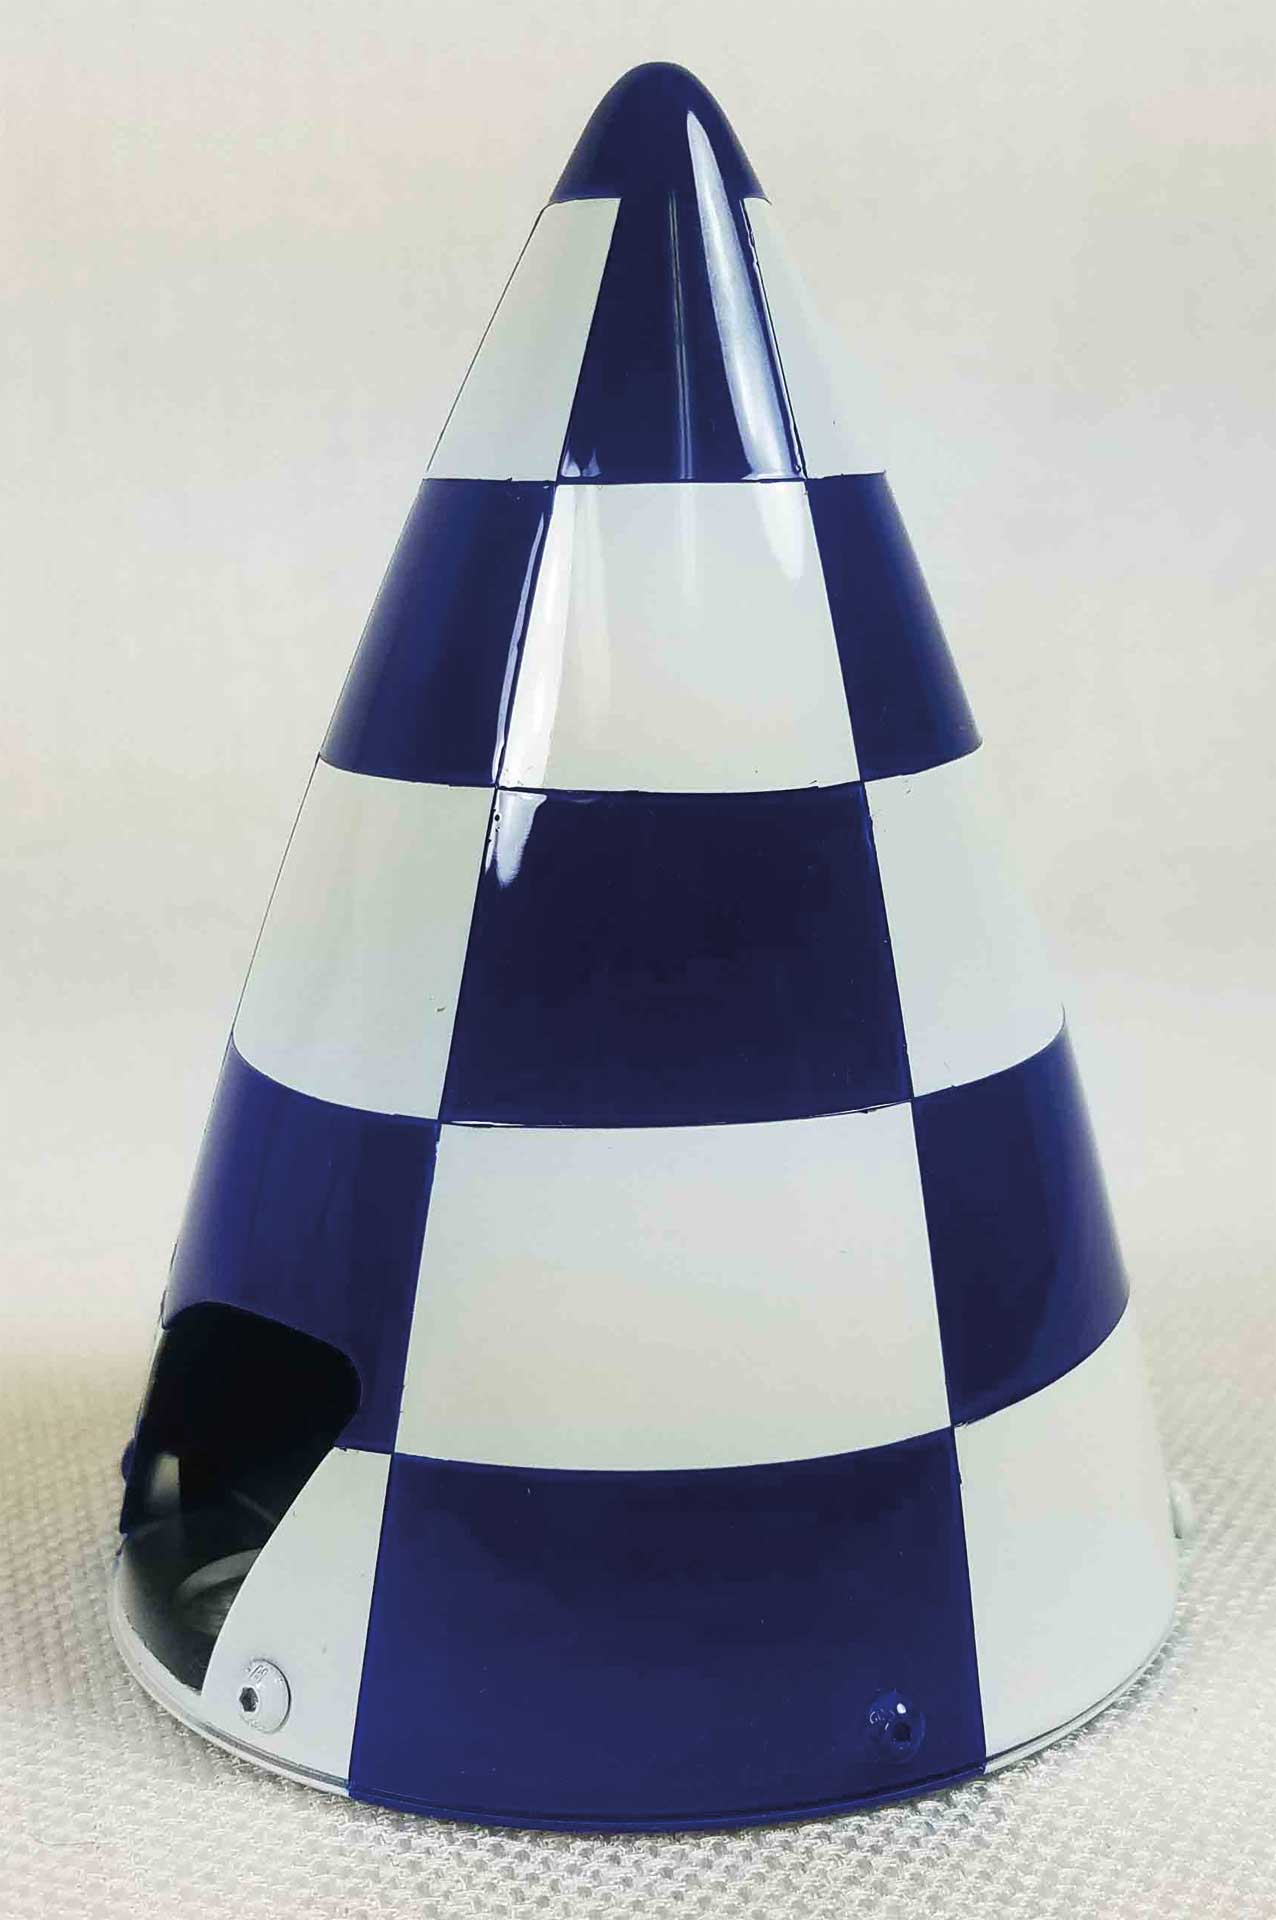 EXTREMEFLIGHT-RC Spinner Carbon 3.5" (89mm) bleu/blanc Motif en damier